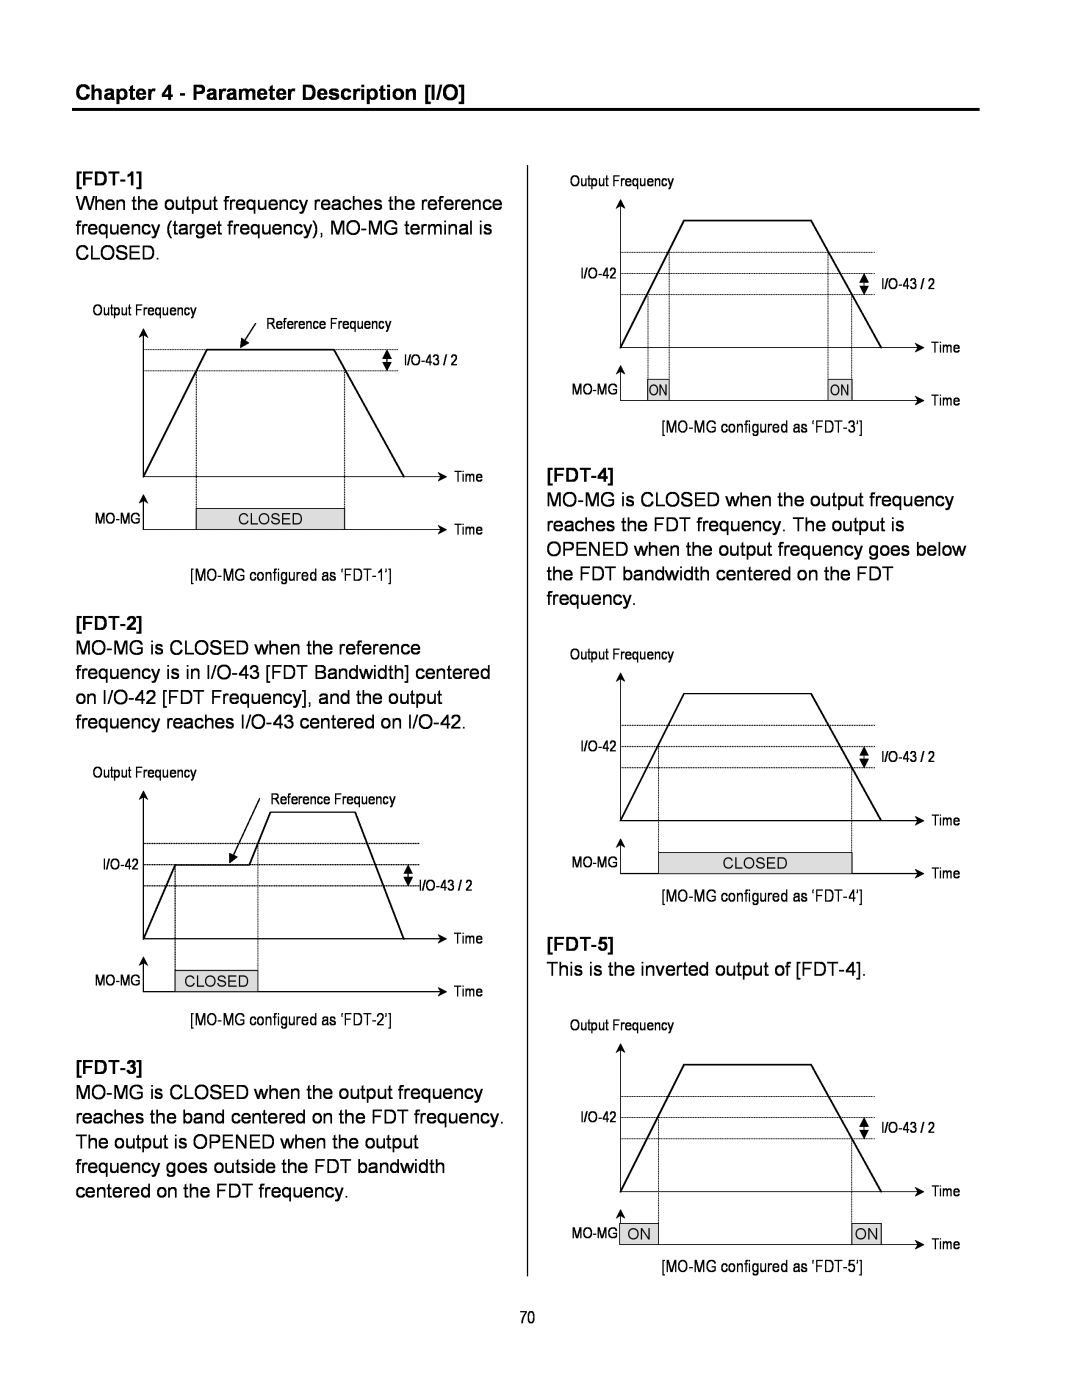 Cleveland Range inverter manual Parameter Description I/O, FDT-1, FDT-2, FDT-3, FDT-4, FDT-5 